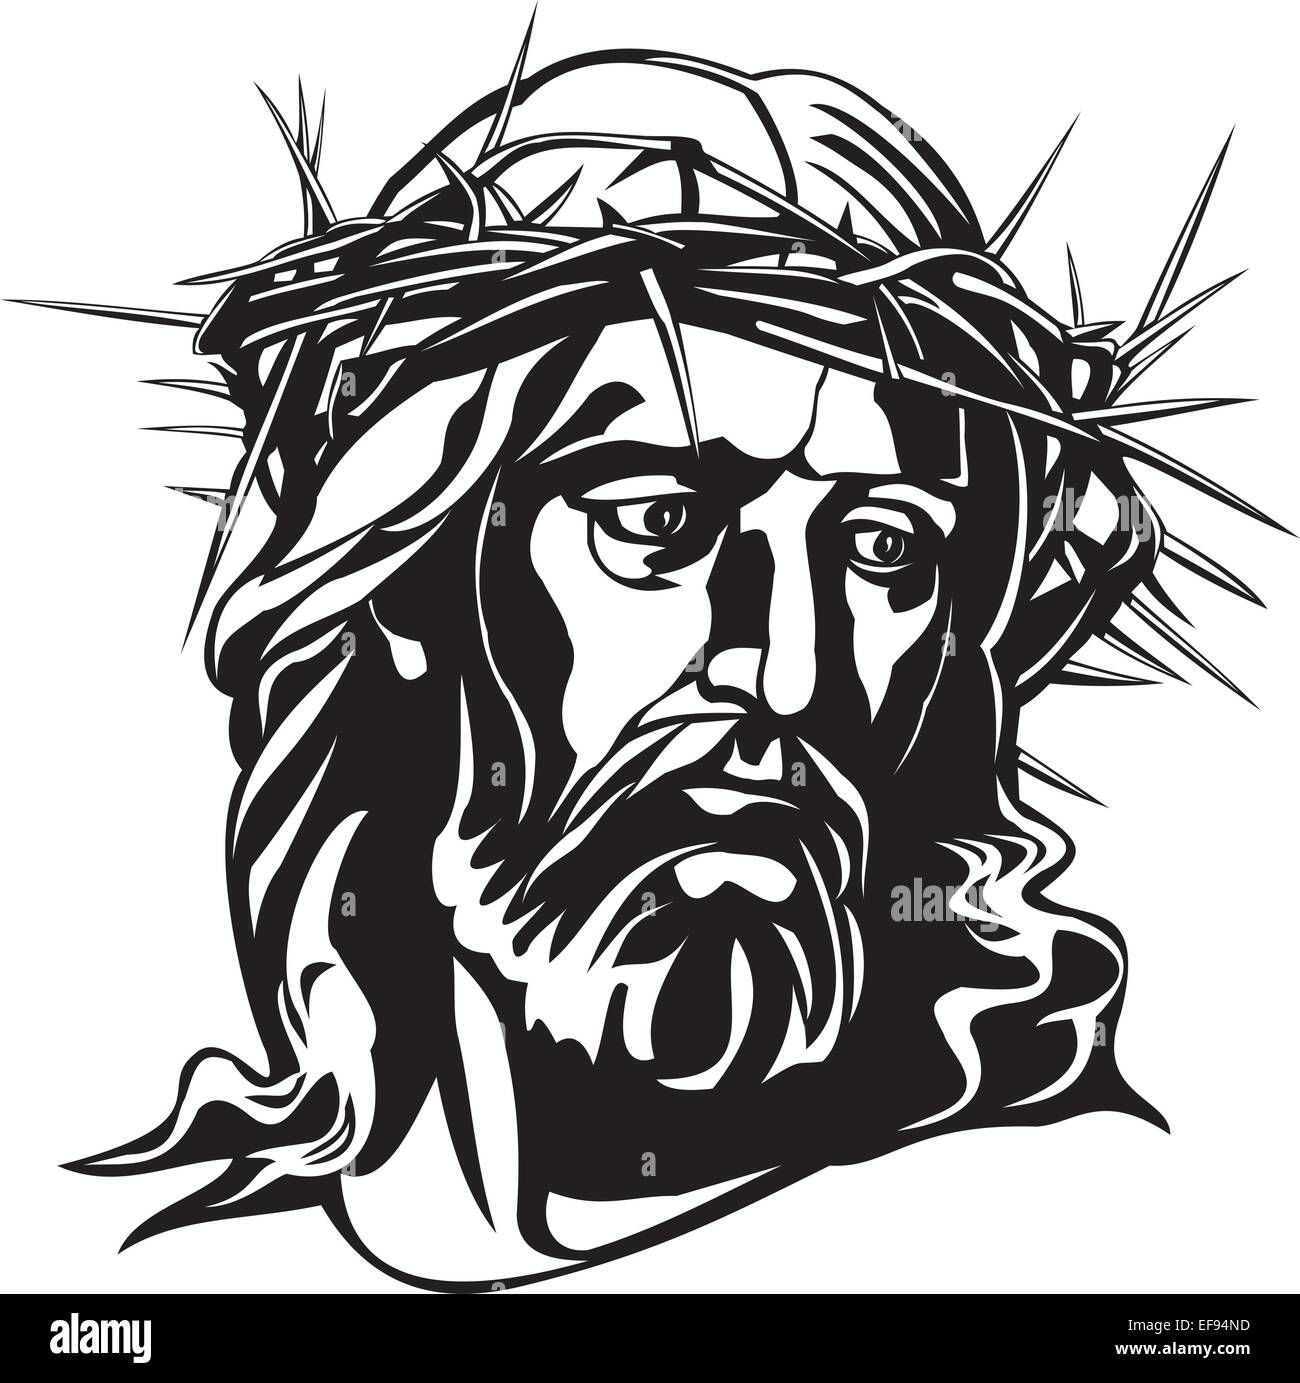 jesus-christ-stock-vector-art-illustration-vector-image-78262617